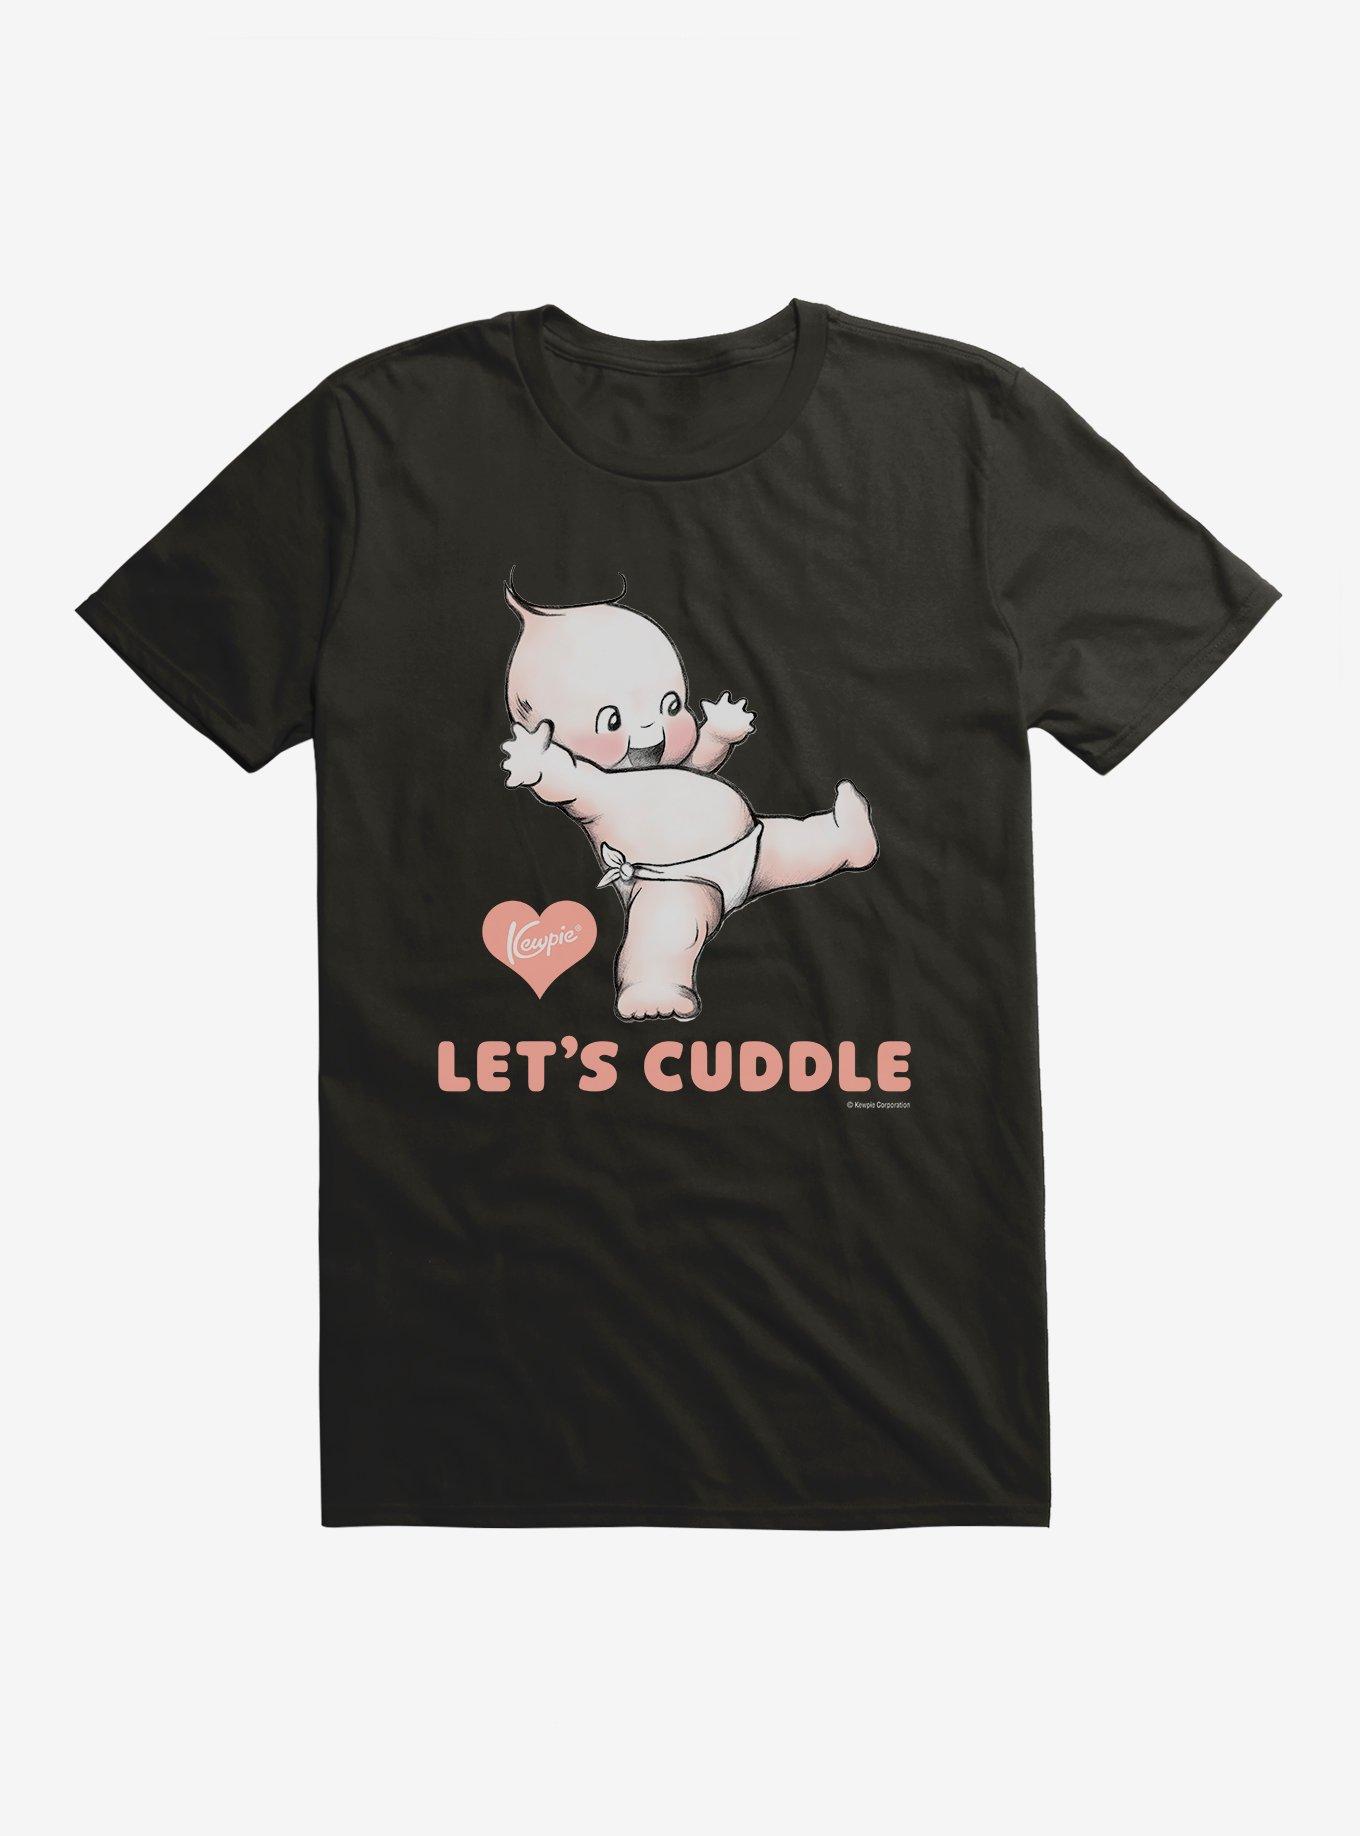 Kewpie Lets Cuddle T-Shirt